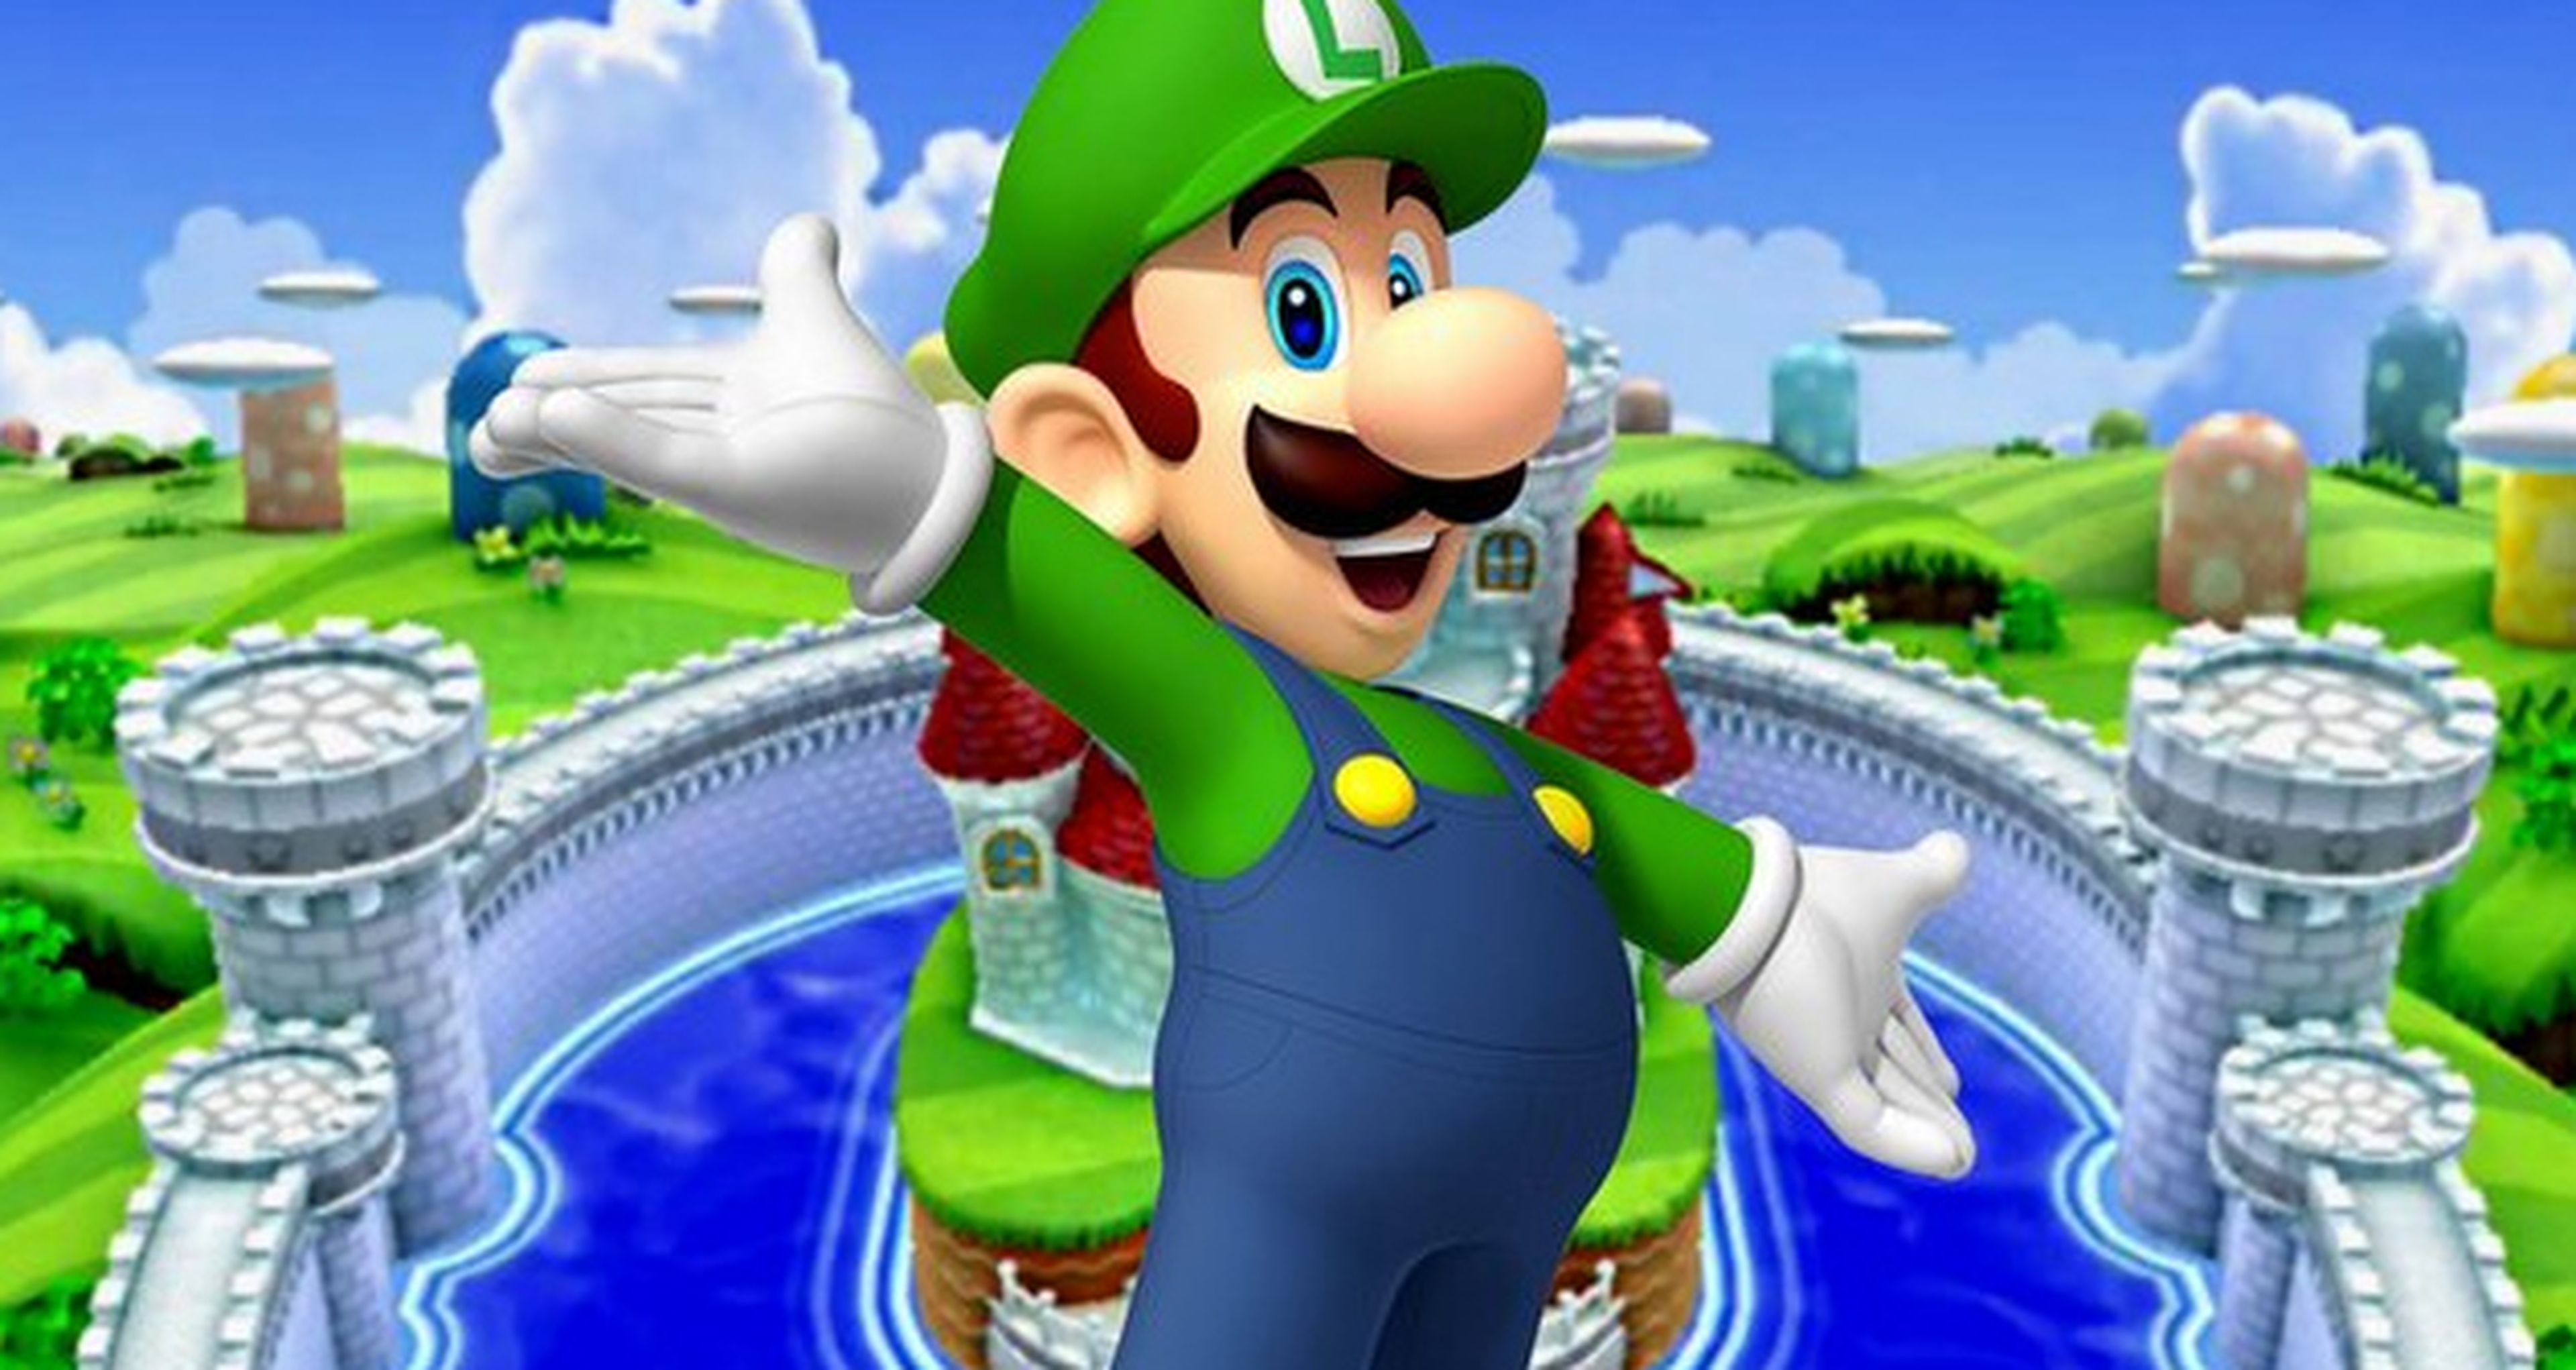 Análisis de New Super Luigi U